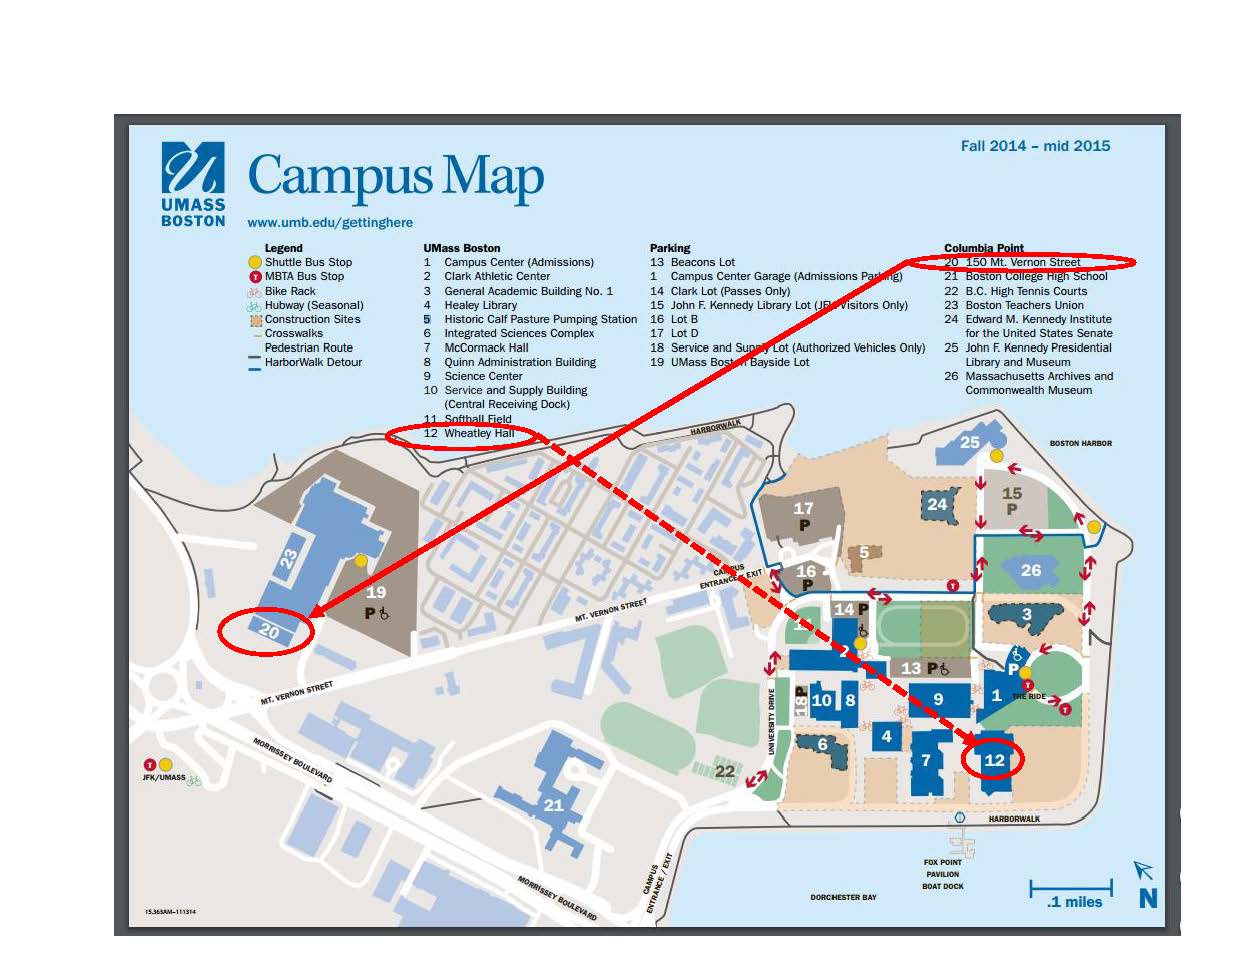 Campus Map example